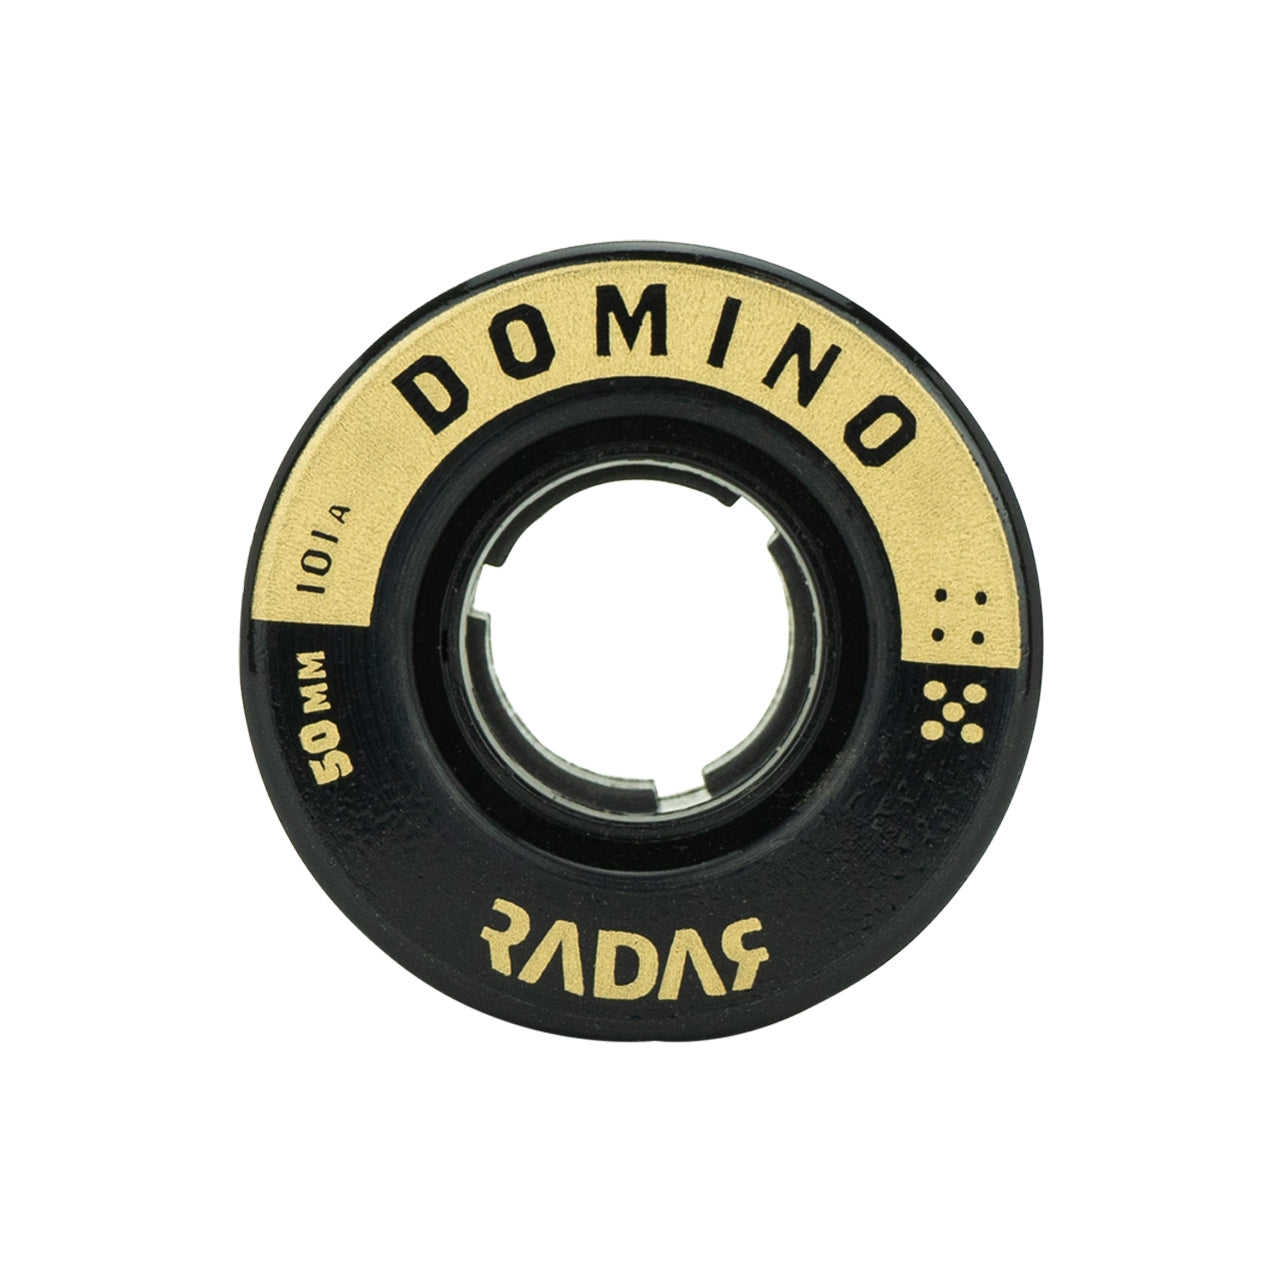 Roues Radar Domino Noir/Or 50 mm 101a - Lot de 4